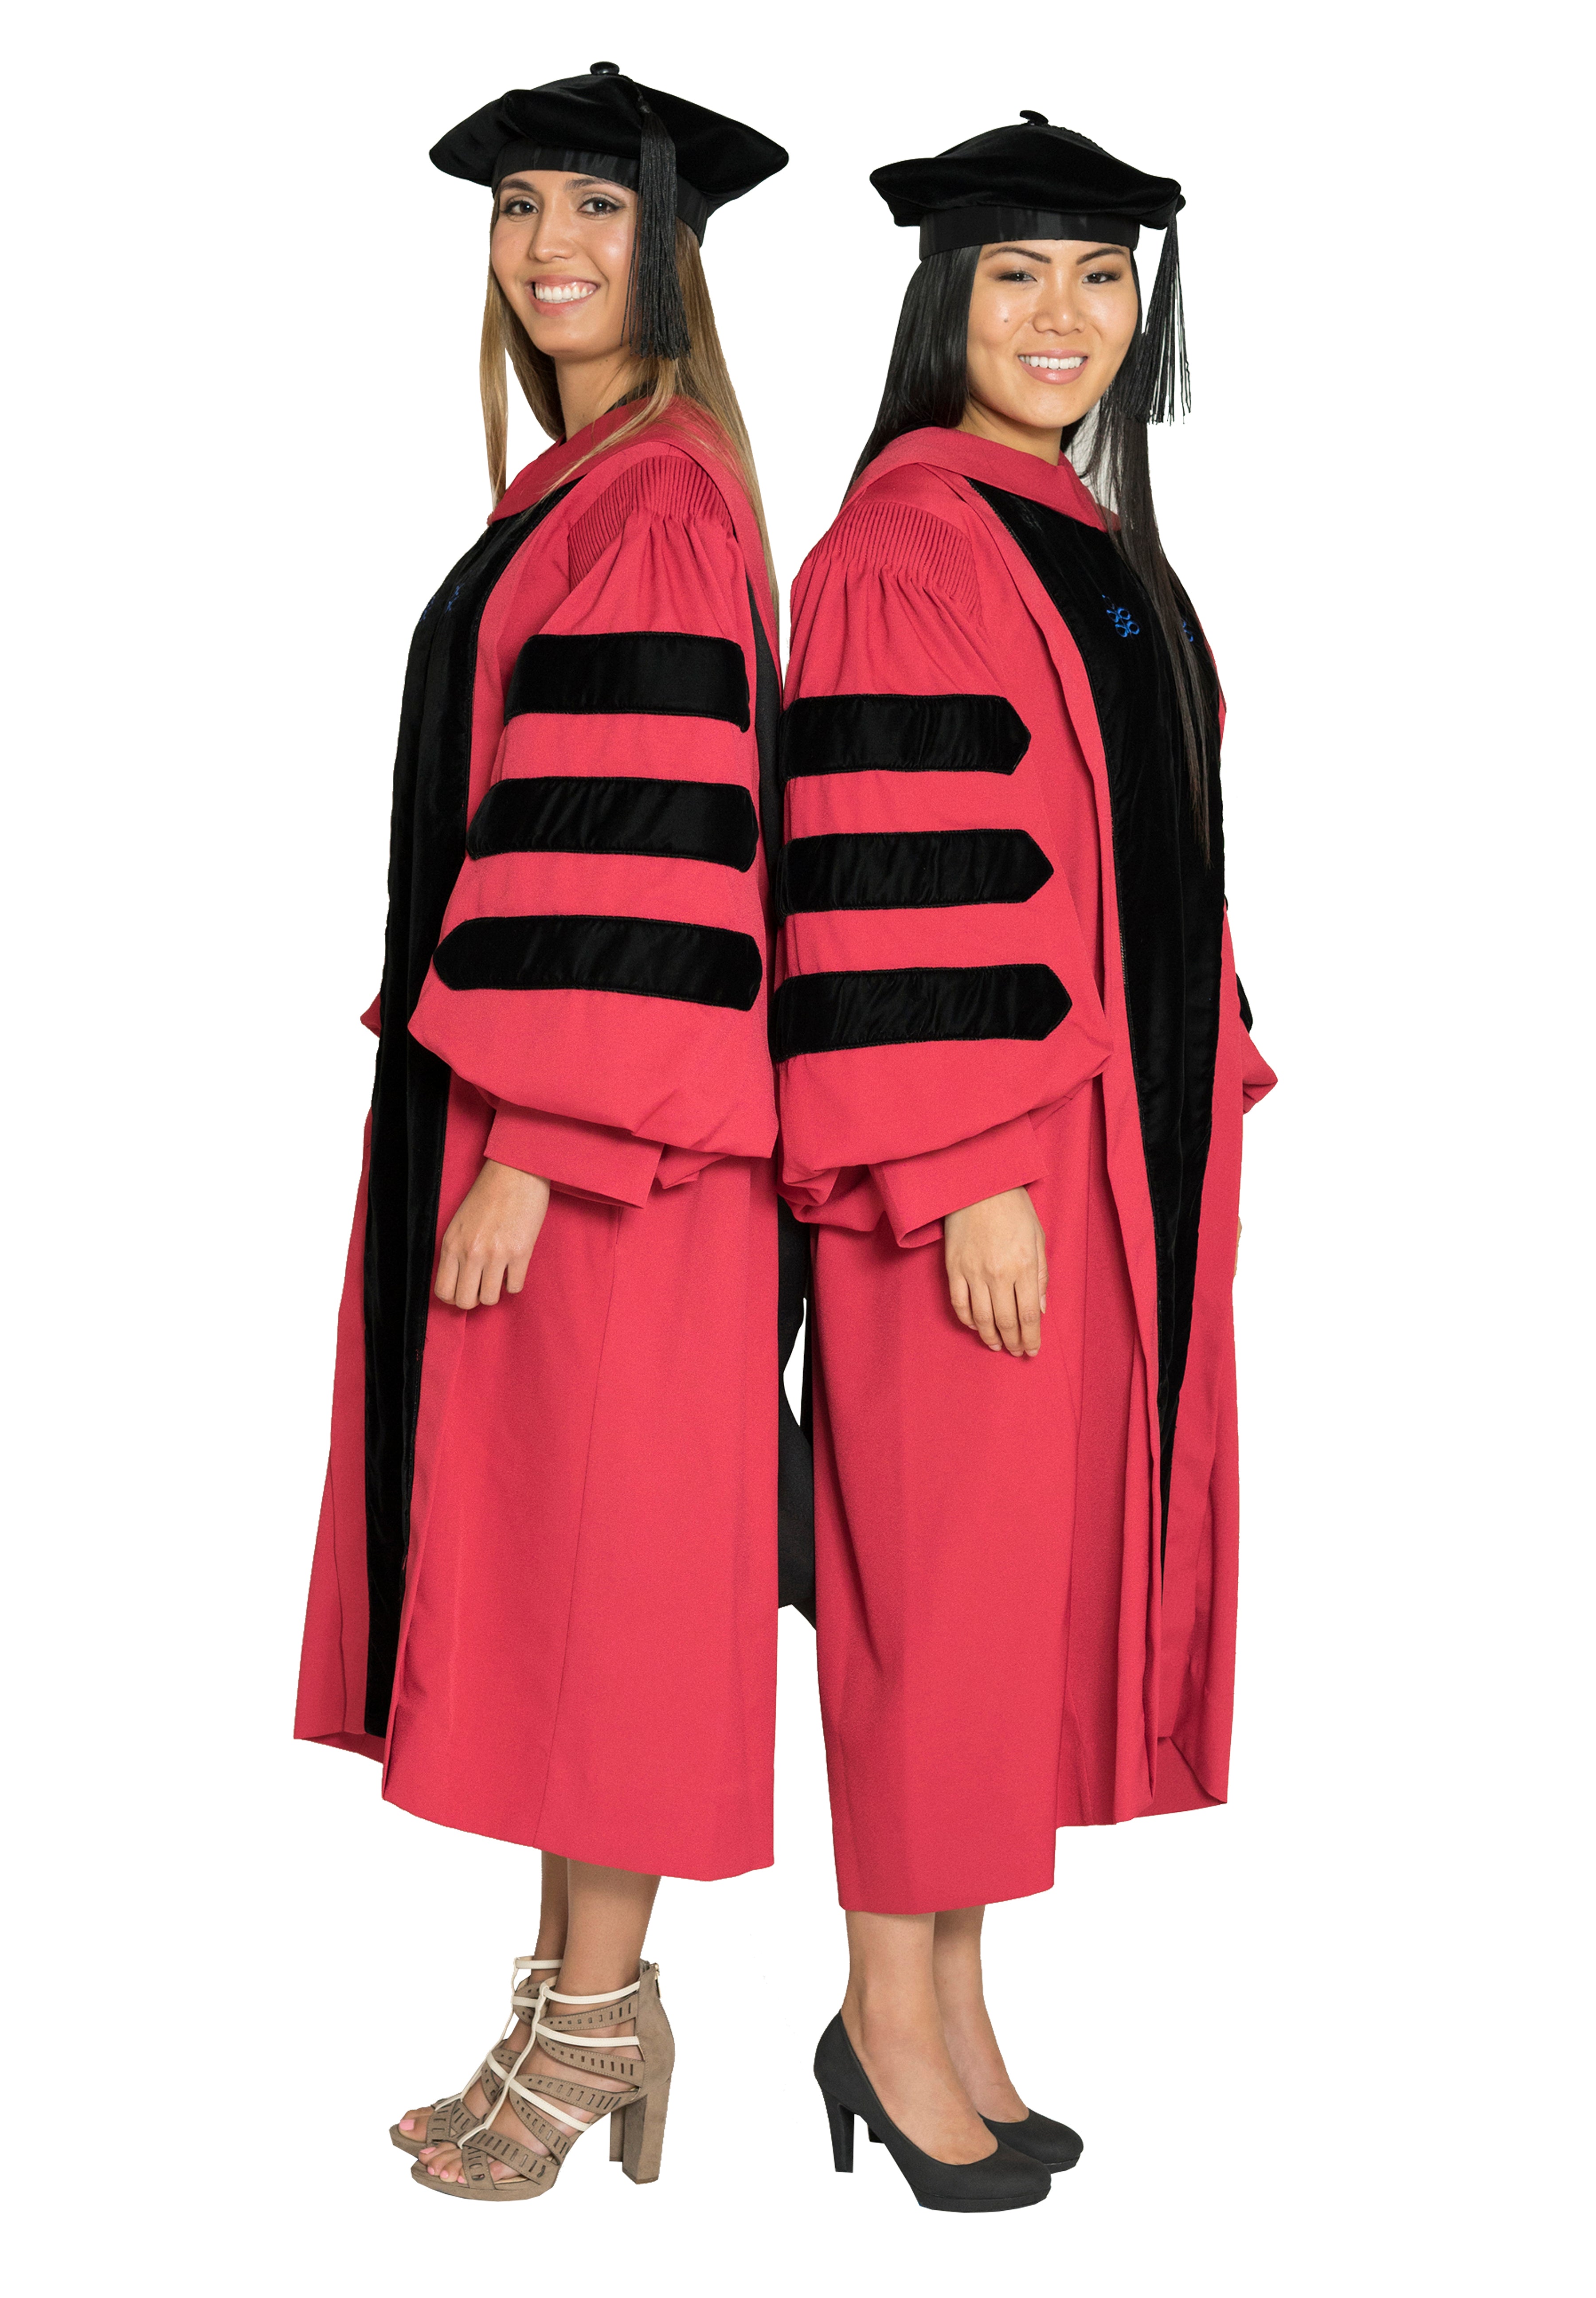 Harvard University Doctoral Regalia Rental - Harvard PhD Gown, Doctoral Hood, Four-Sided Cap/Tam